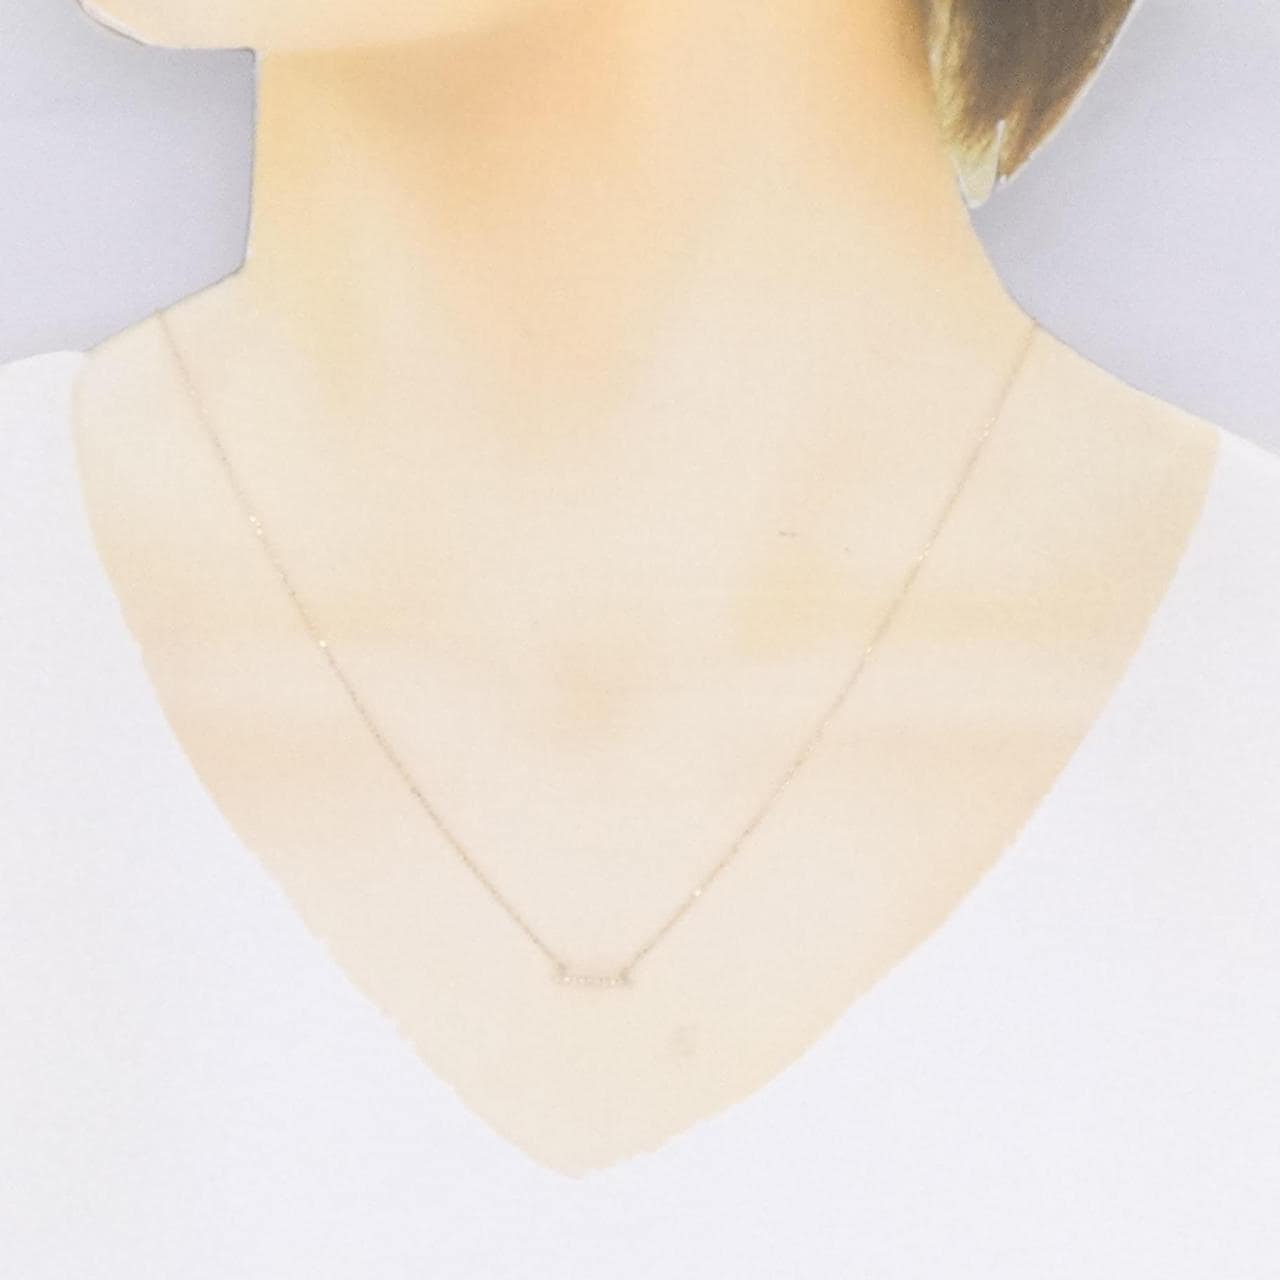 [BRAND NEW] K18YG Diamond necklace 0.02CT